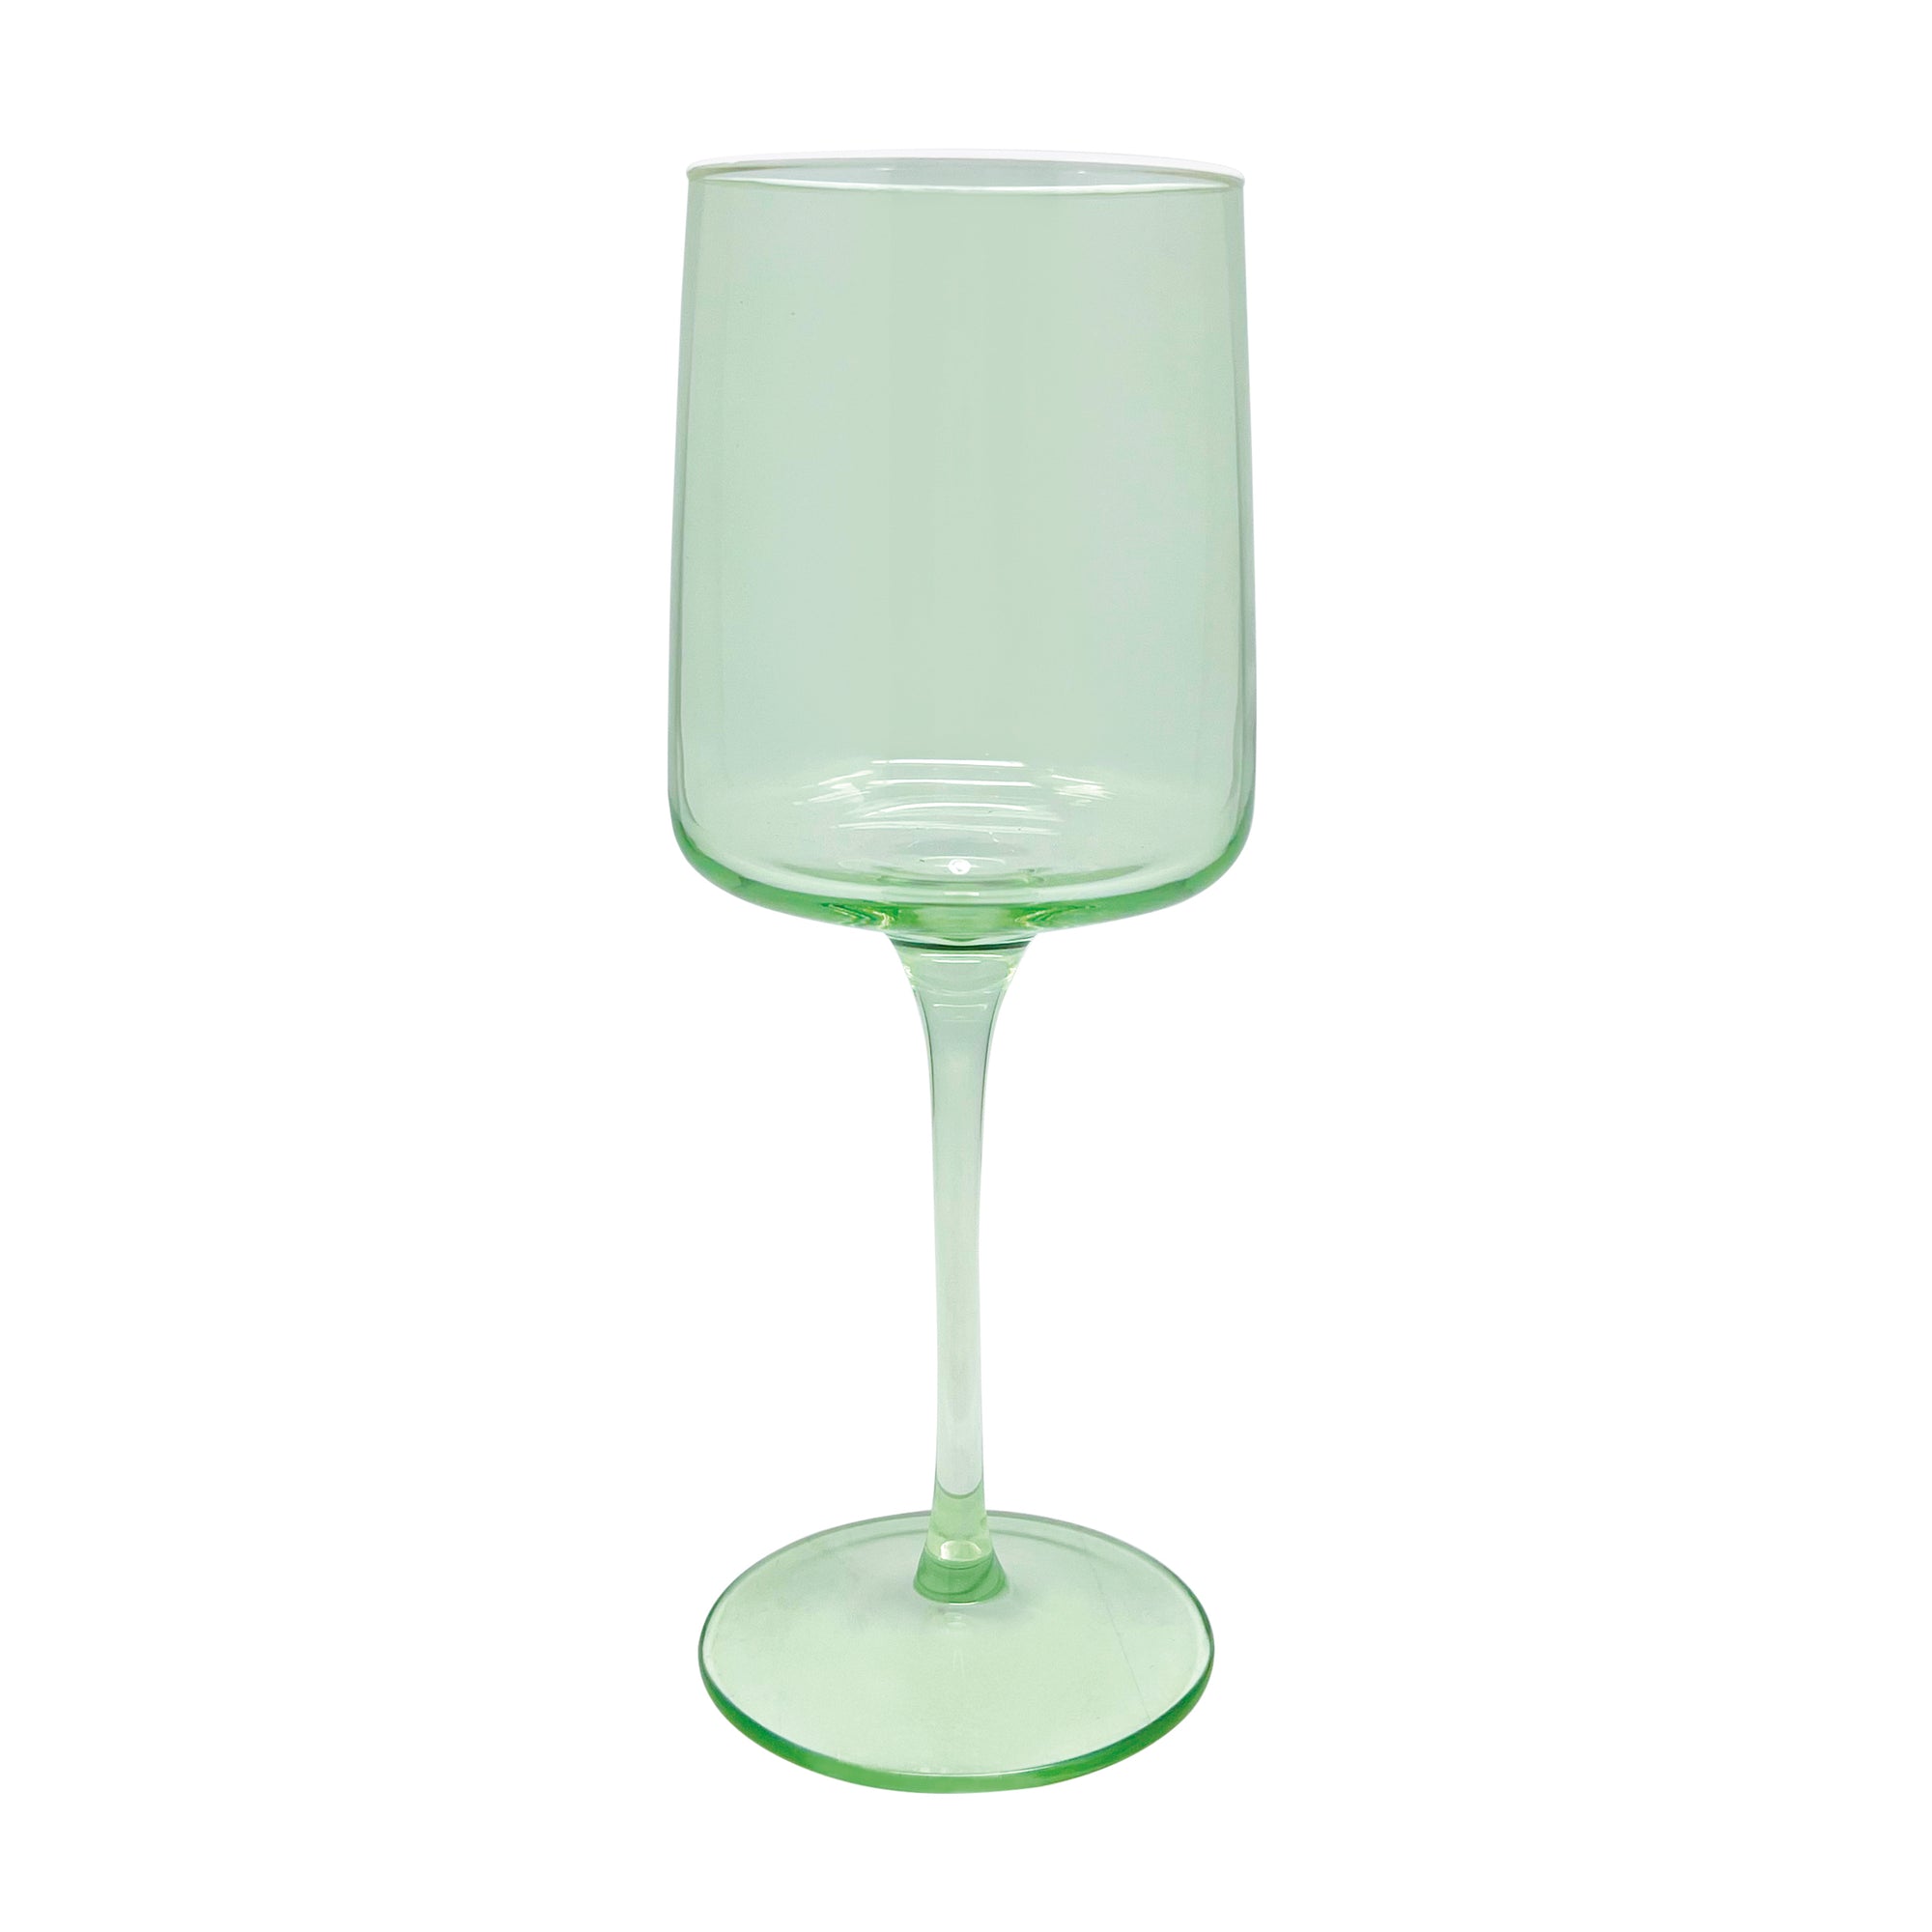 Fine Line Light Green with White Rim Wine Glass